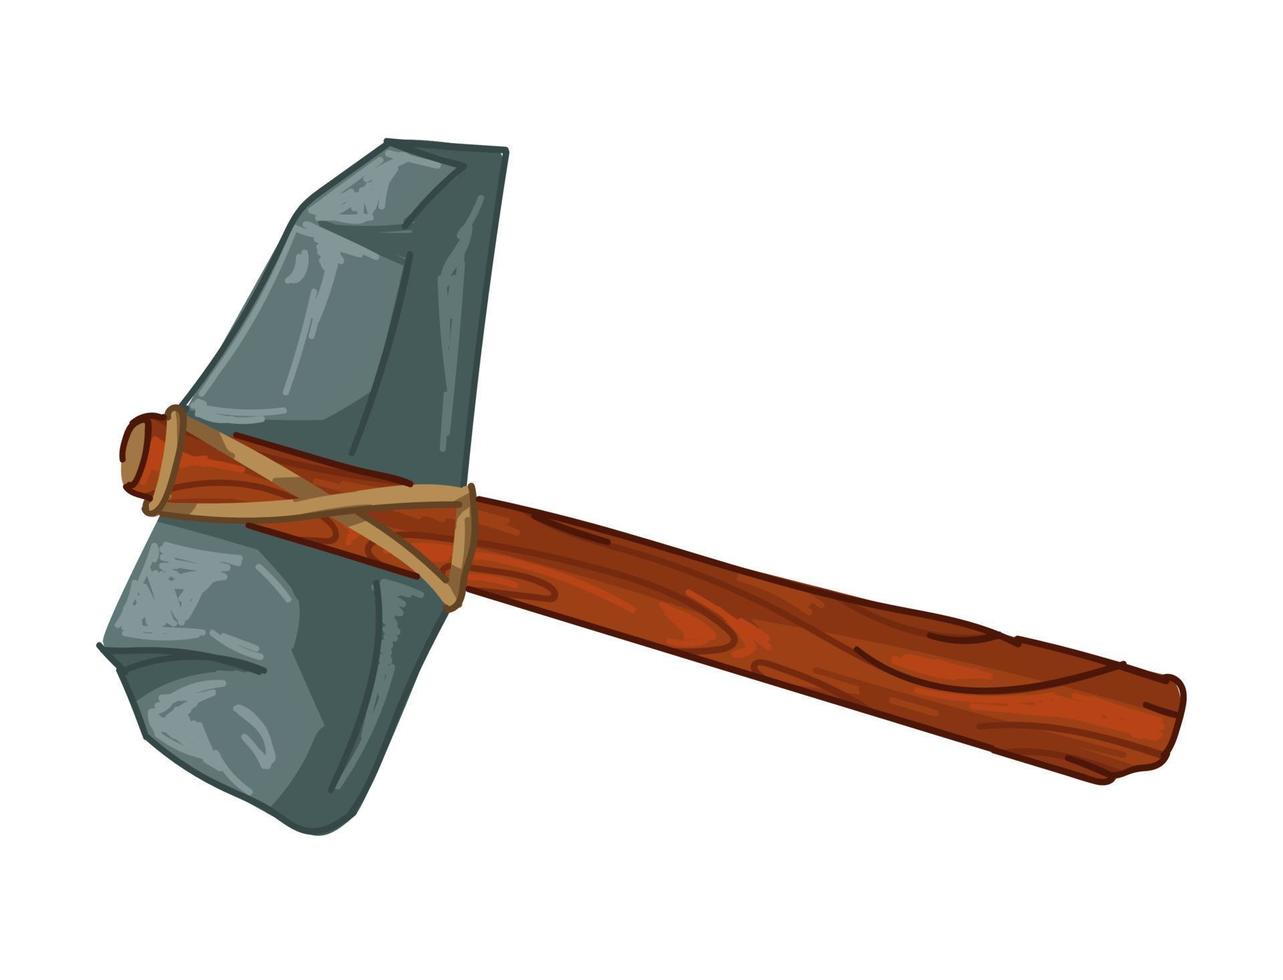 Prehistoric stone ax, tool equipment for work vector